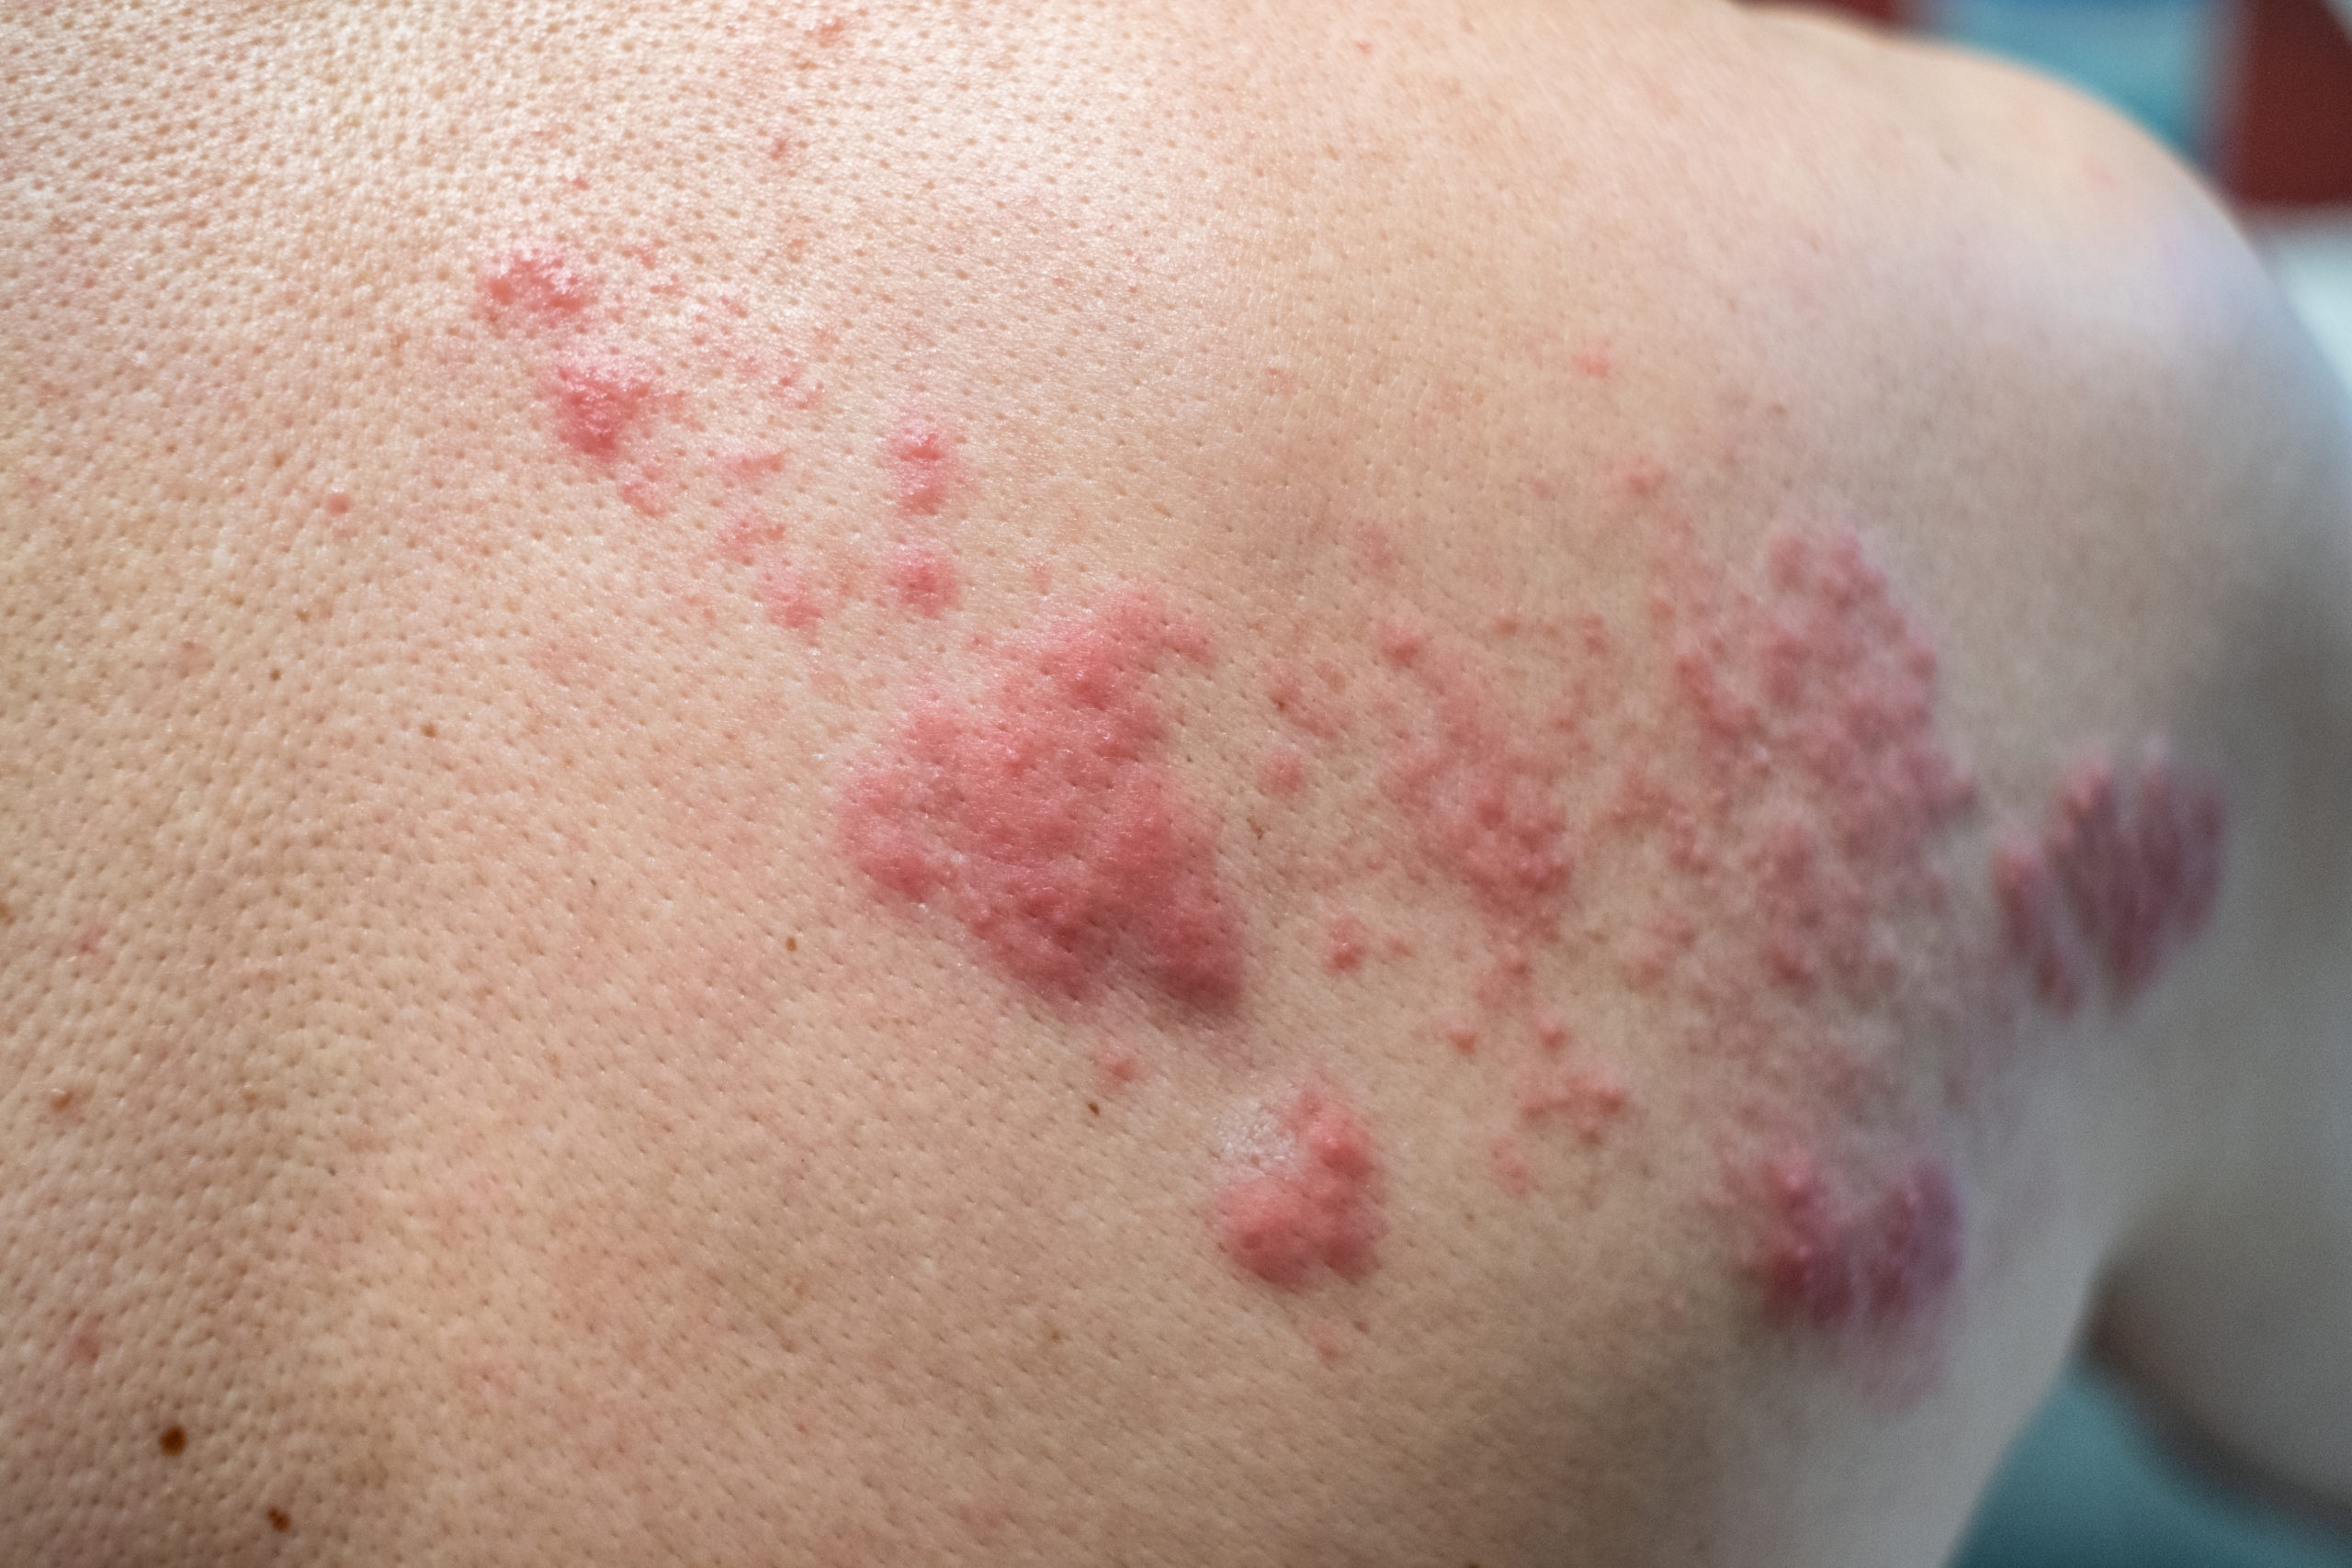 rash on someone's skin